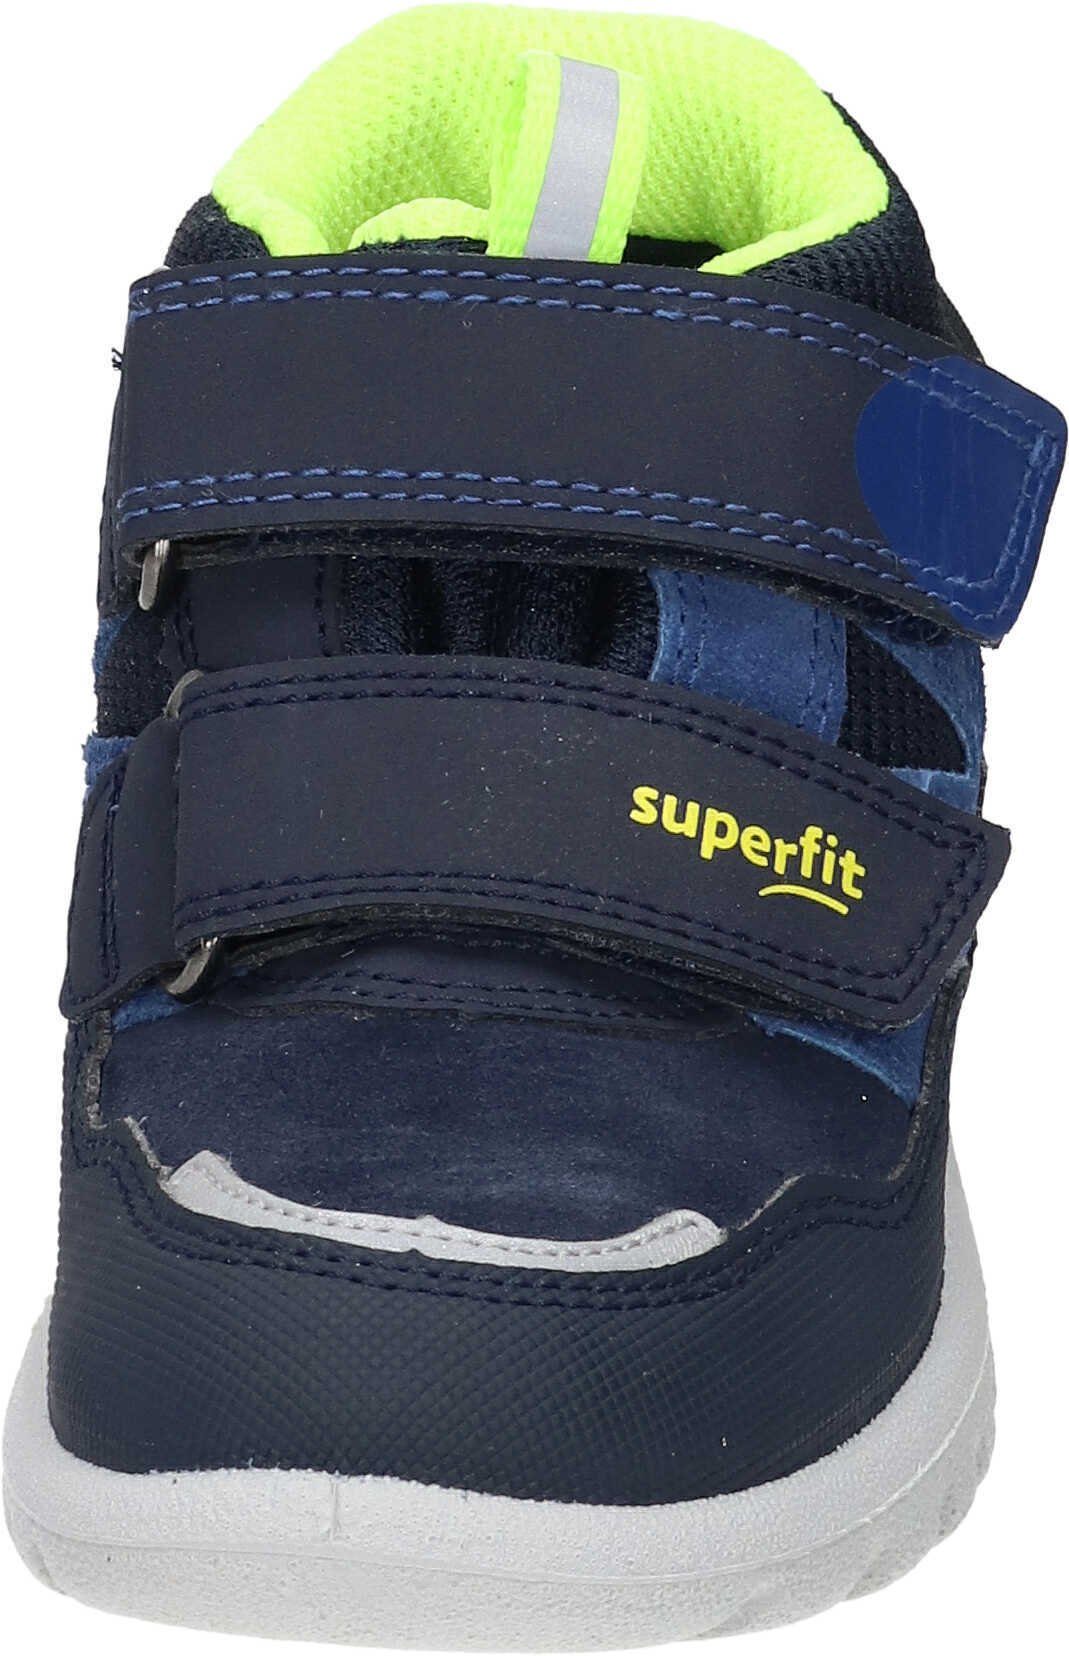 Synthetik strapazierfähigem Stiefel Superfit blau Stiefel aus